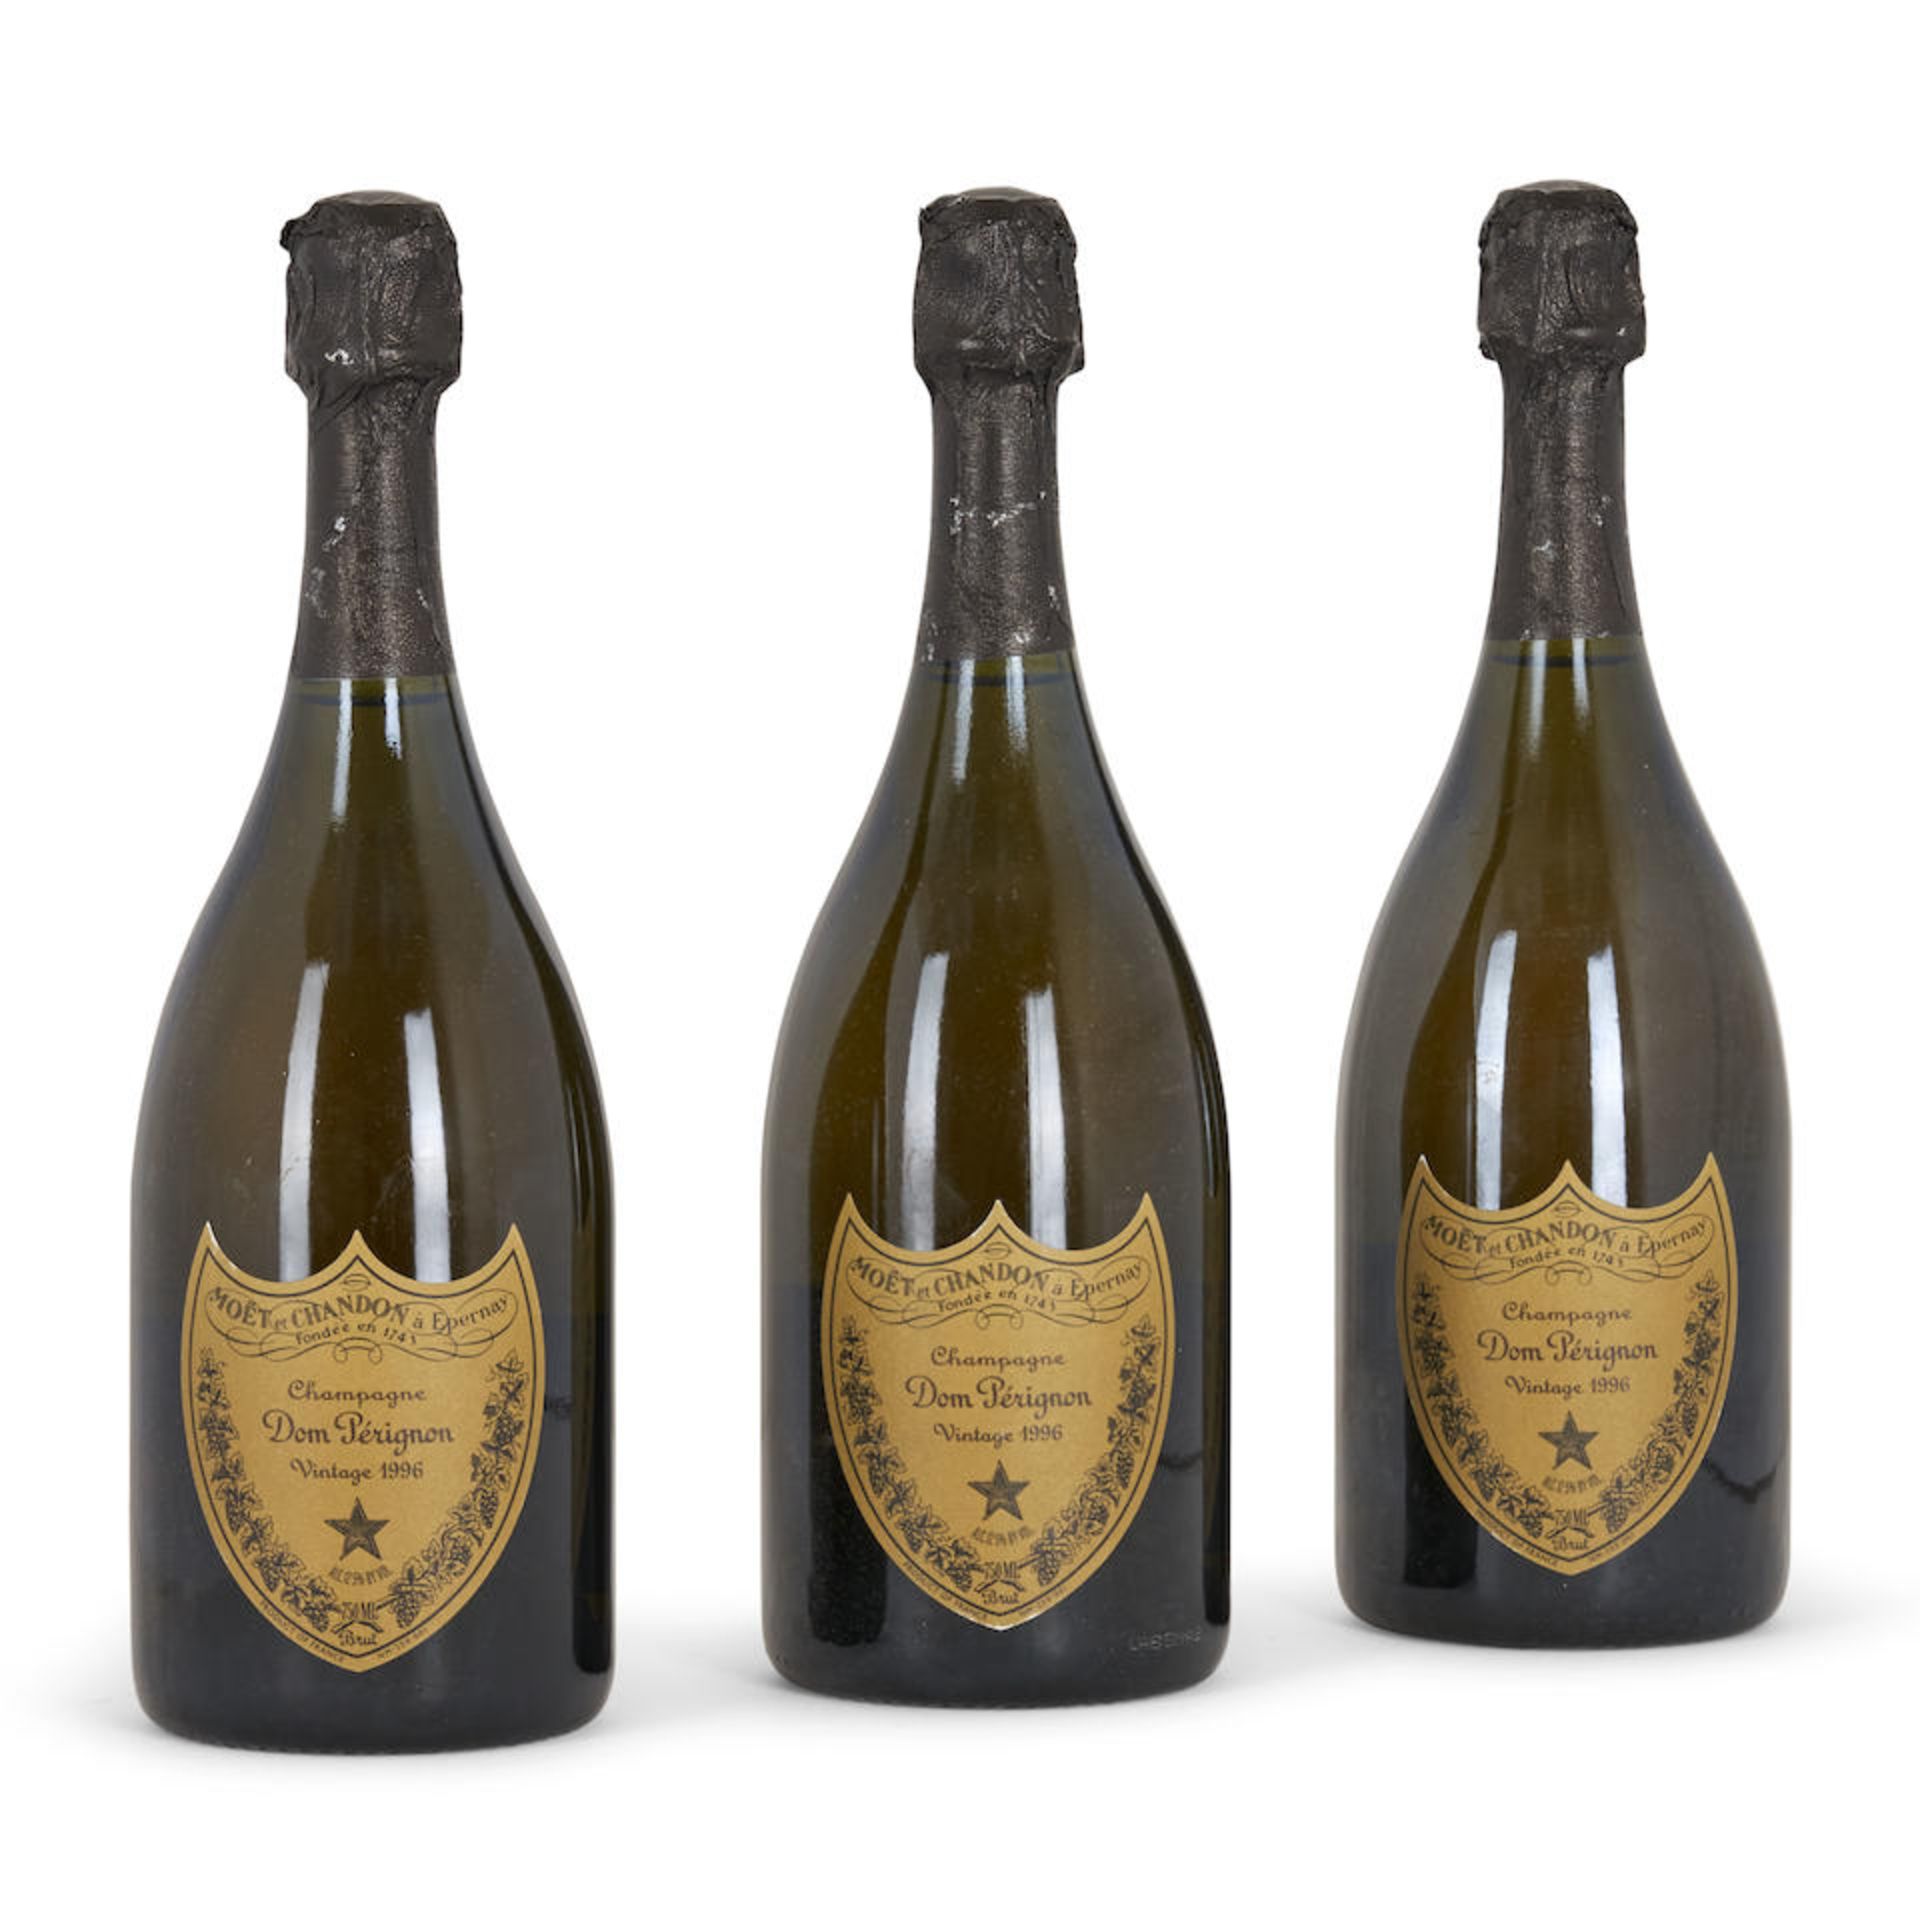 Dom Perignon 1996 (3 bottles)